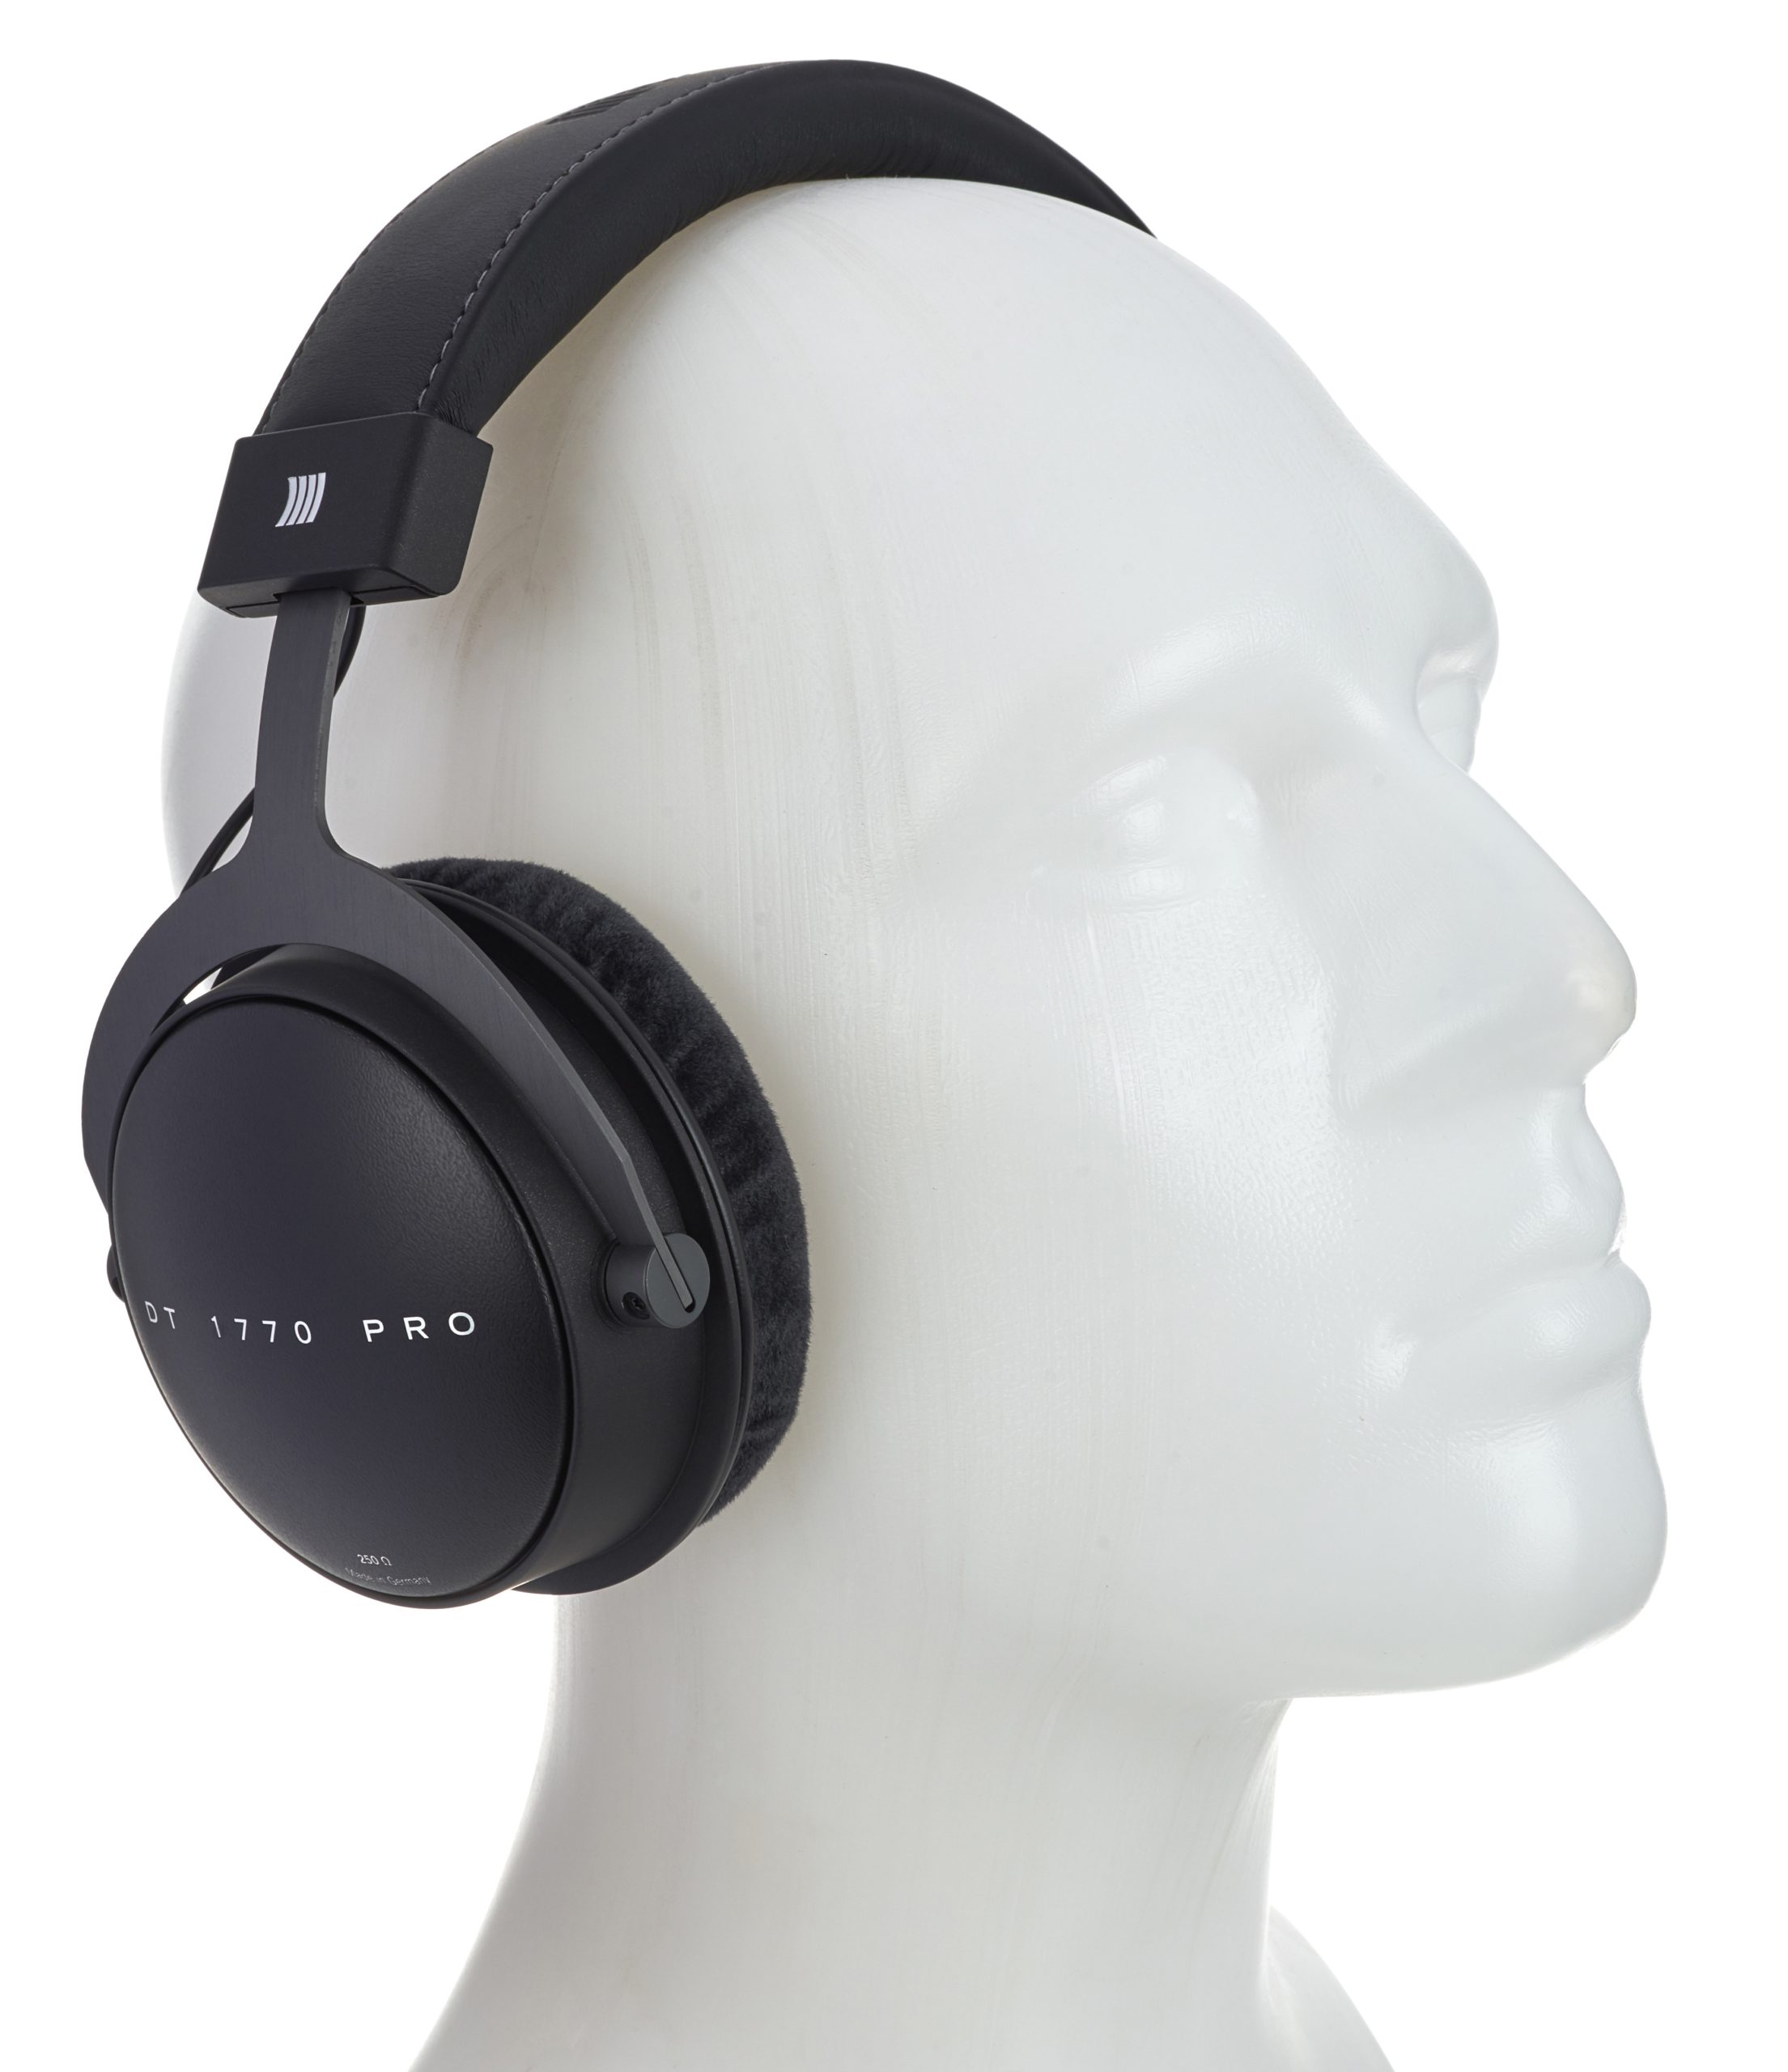 Beyerdynamic DT 1770 Pro Review | headphonecheck.com